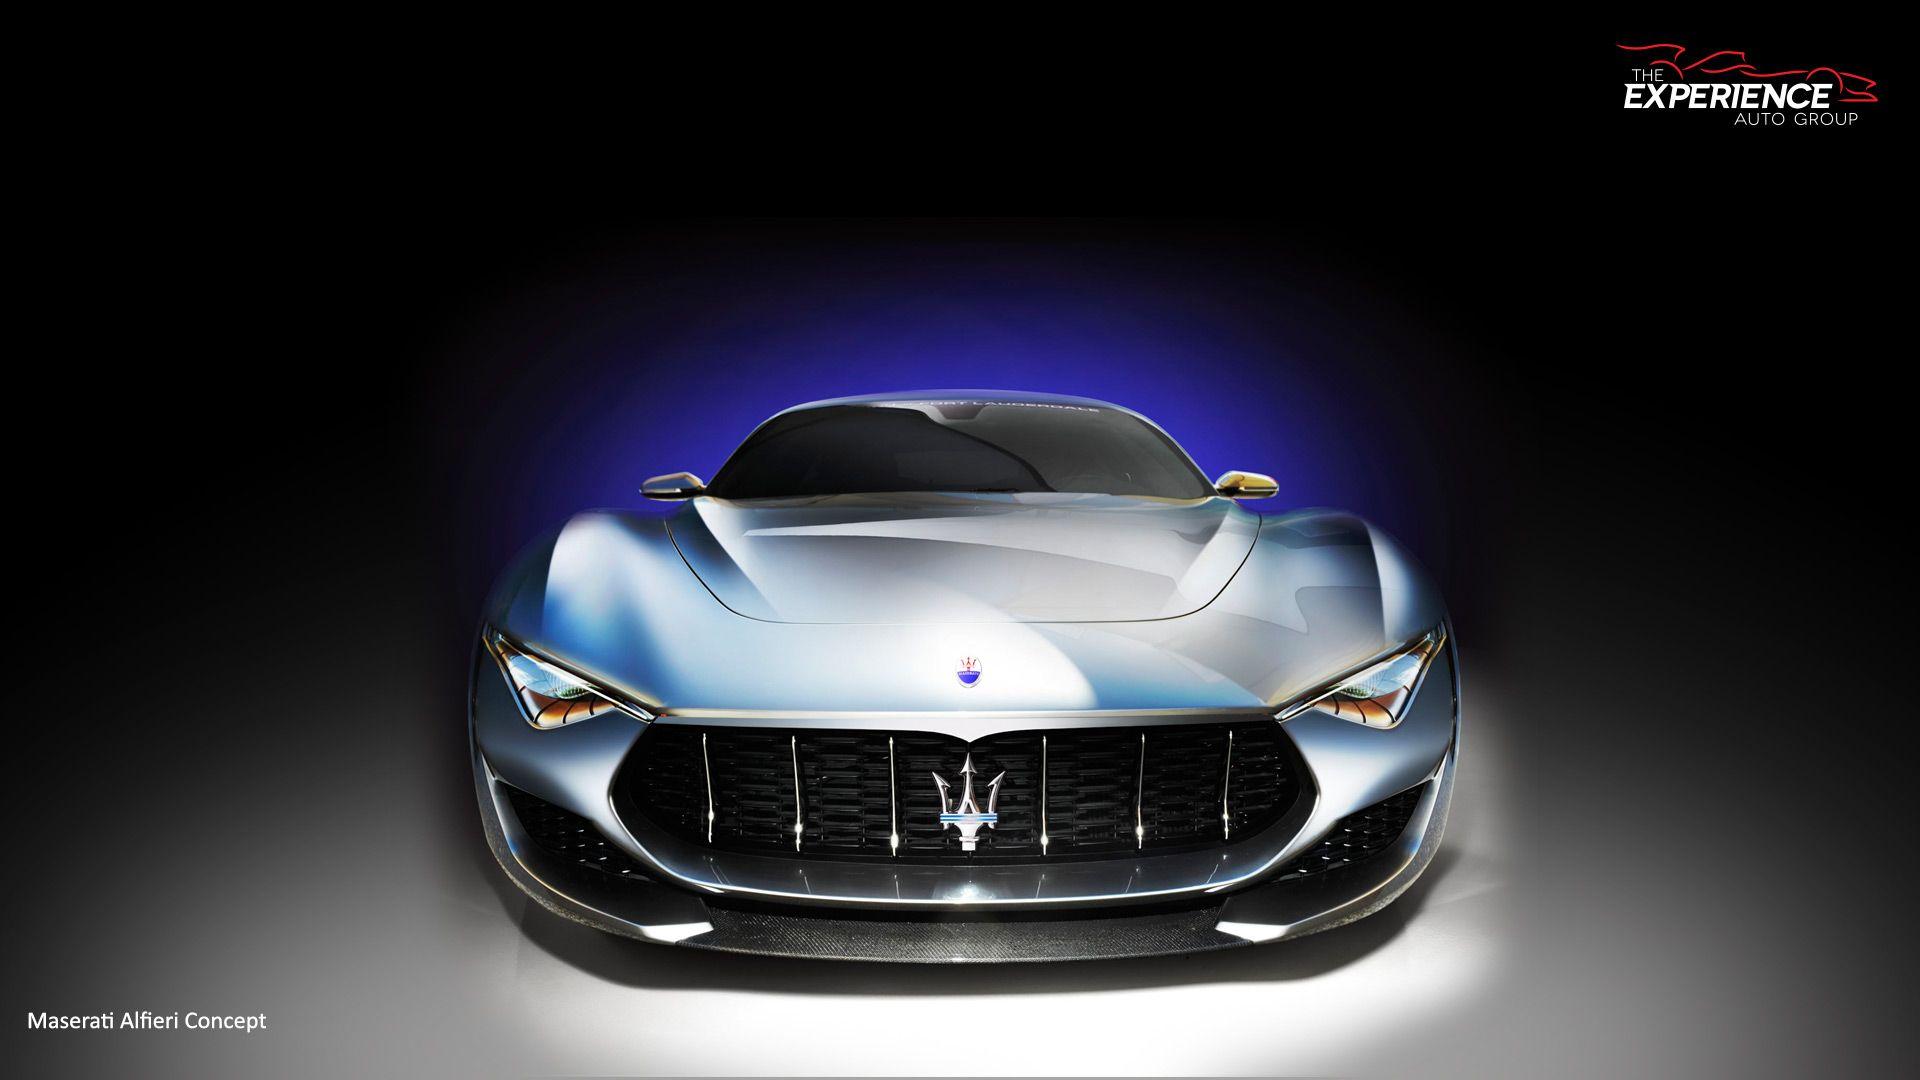 Featured image of post Maserati Car Hd Wallpaper Download - Cars maserati other cars concept super lamborghini corvette race future pixars movies mallett 2011 car.